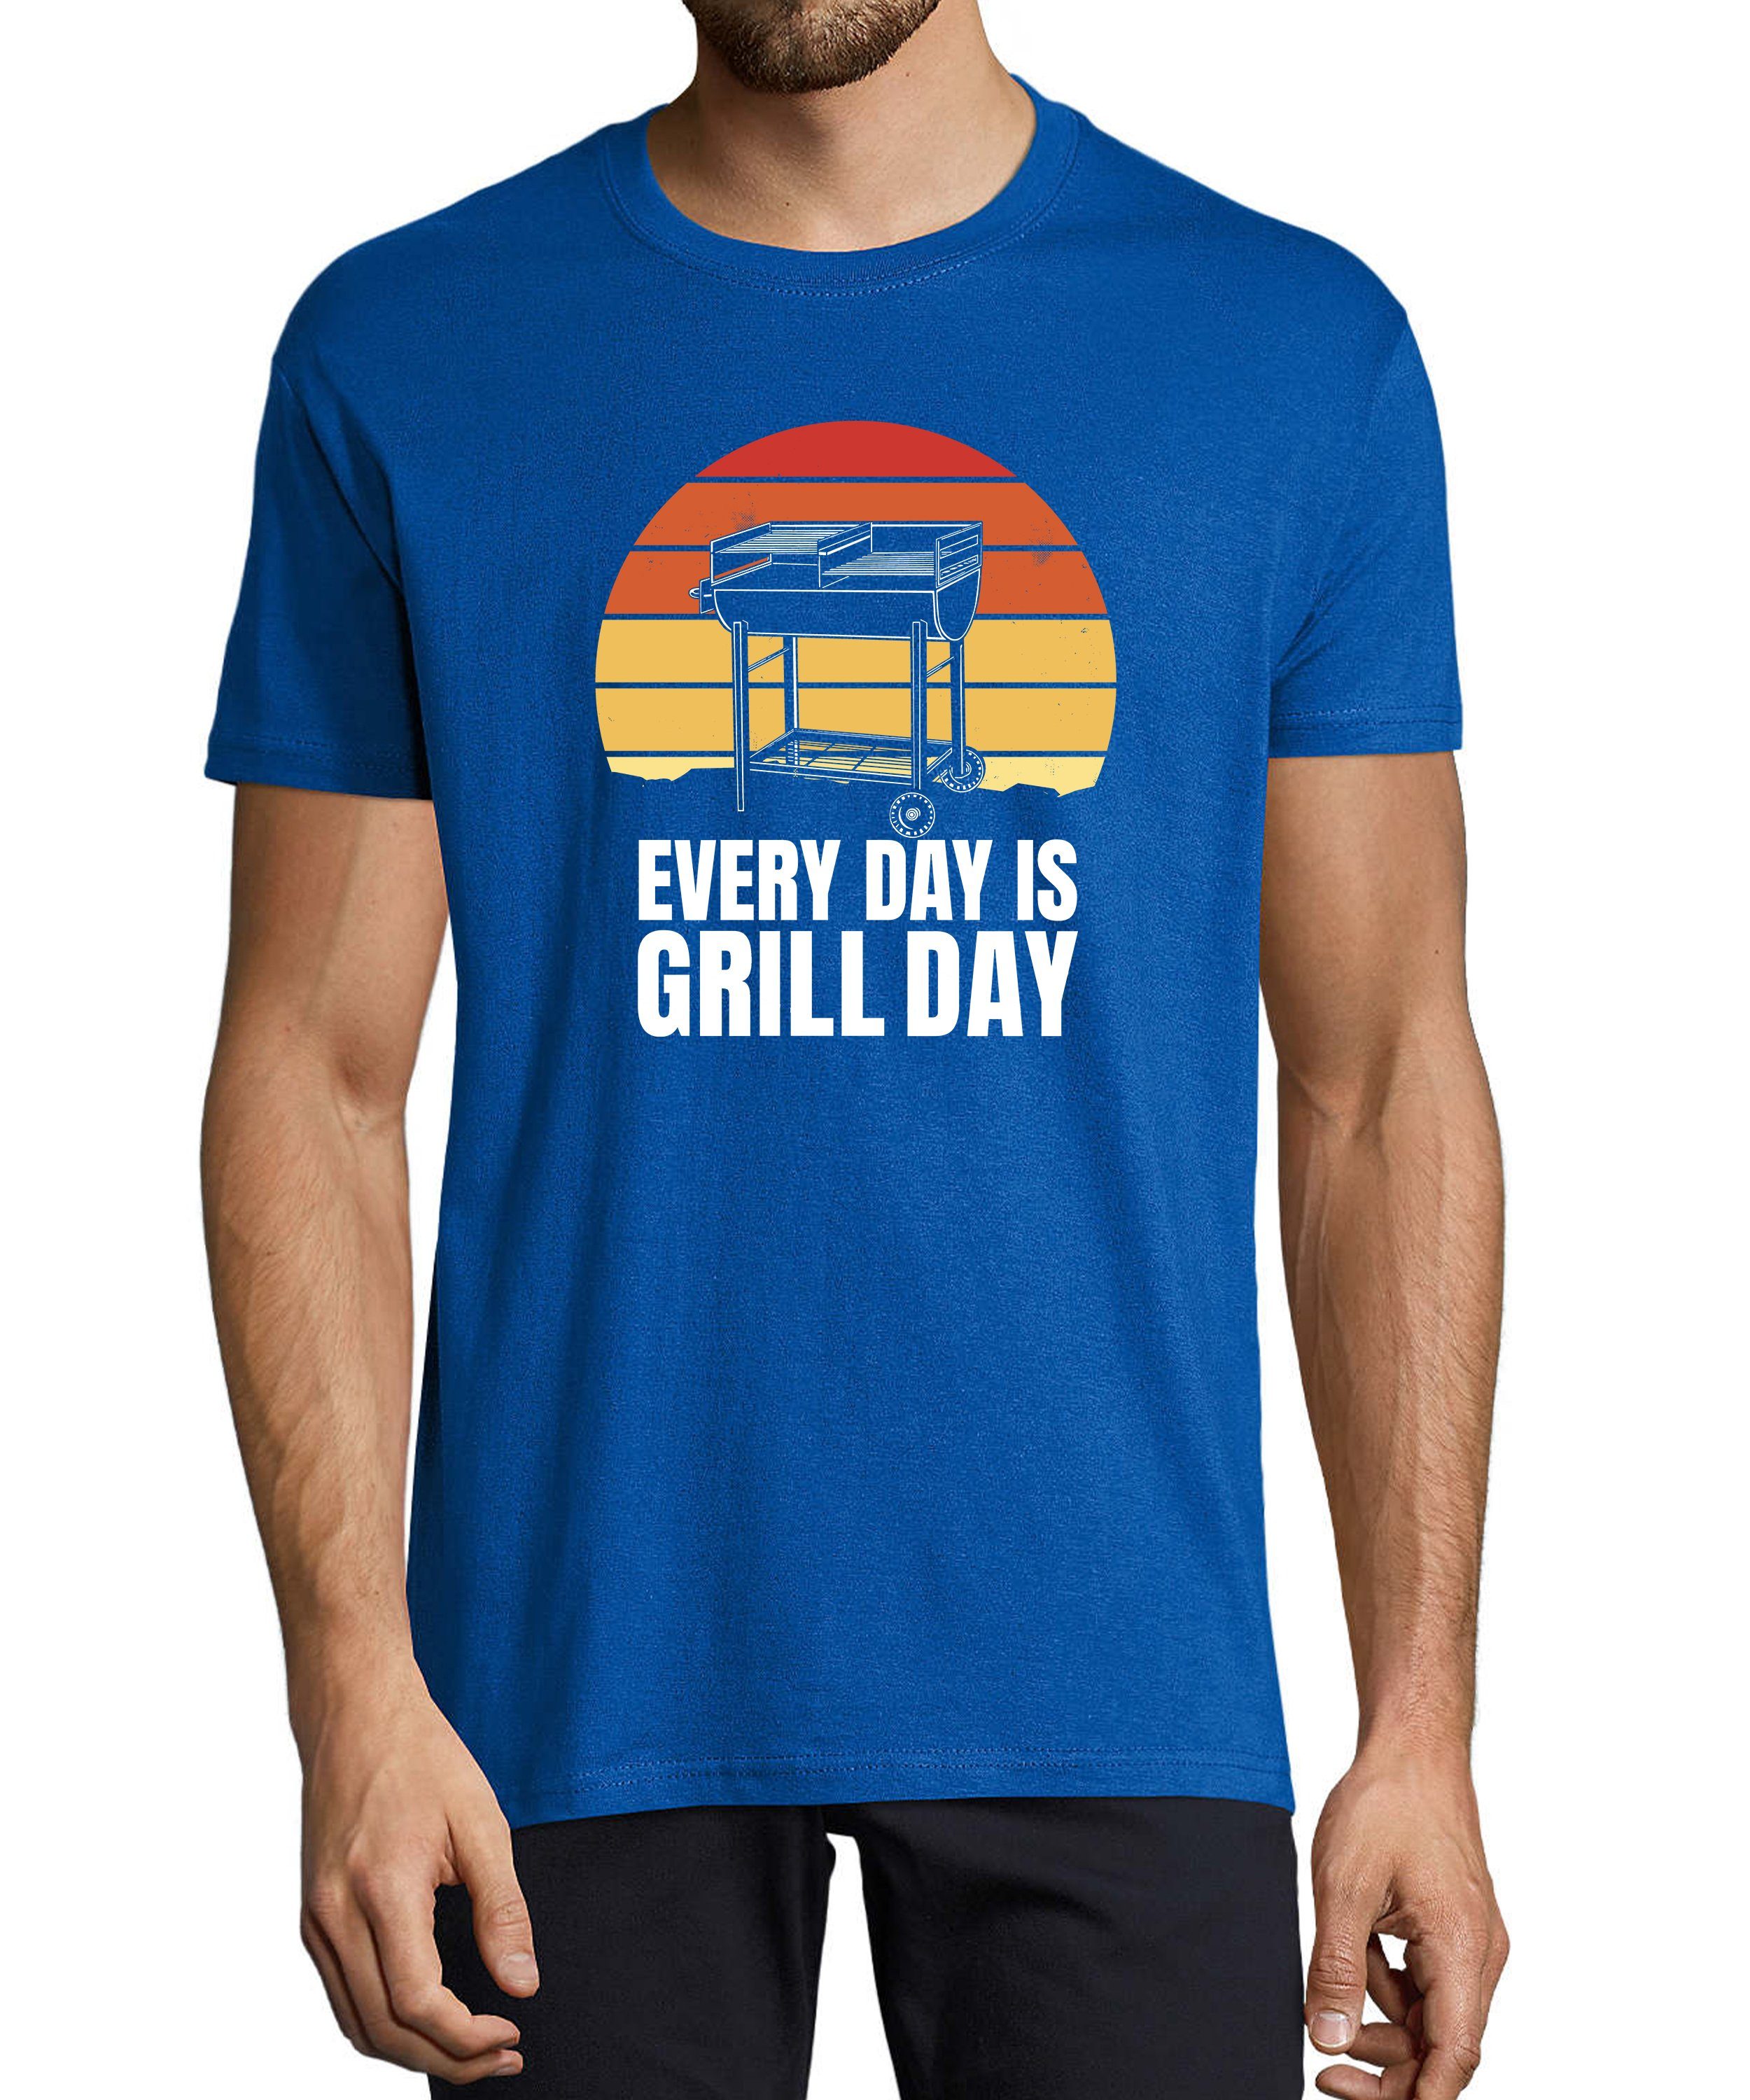 MyDesign24 T-Shirt Herren BBQ Print Shirt - Retro Grill T-Shirt Every Day is a Grill Day Baumwollshirt mit Aufdruck Regular Fit, i300 royal blau